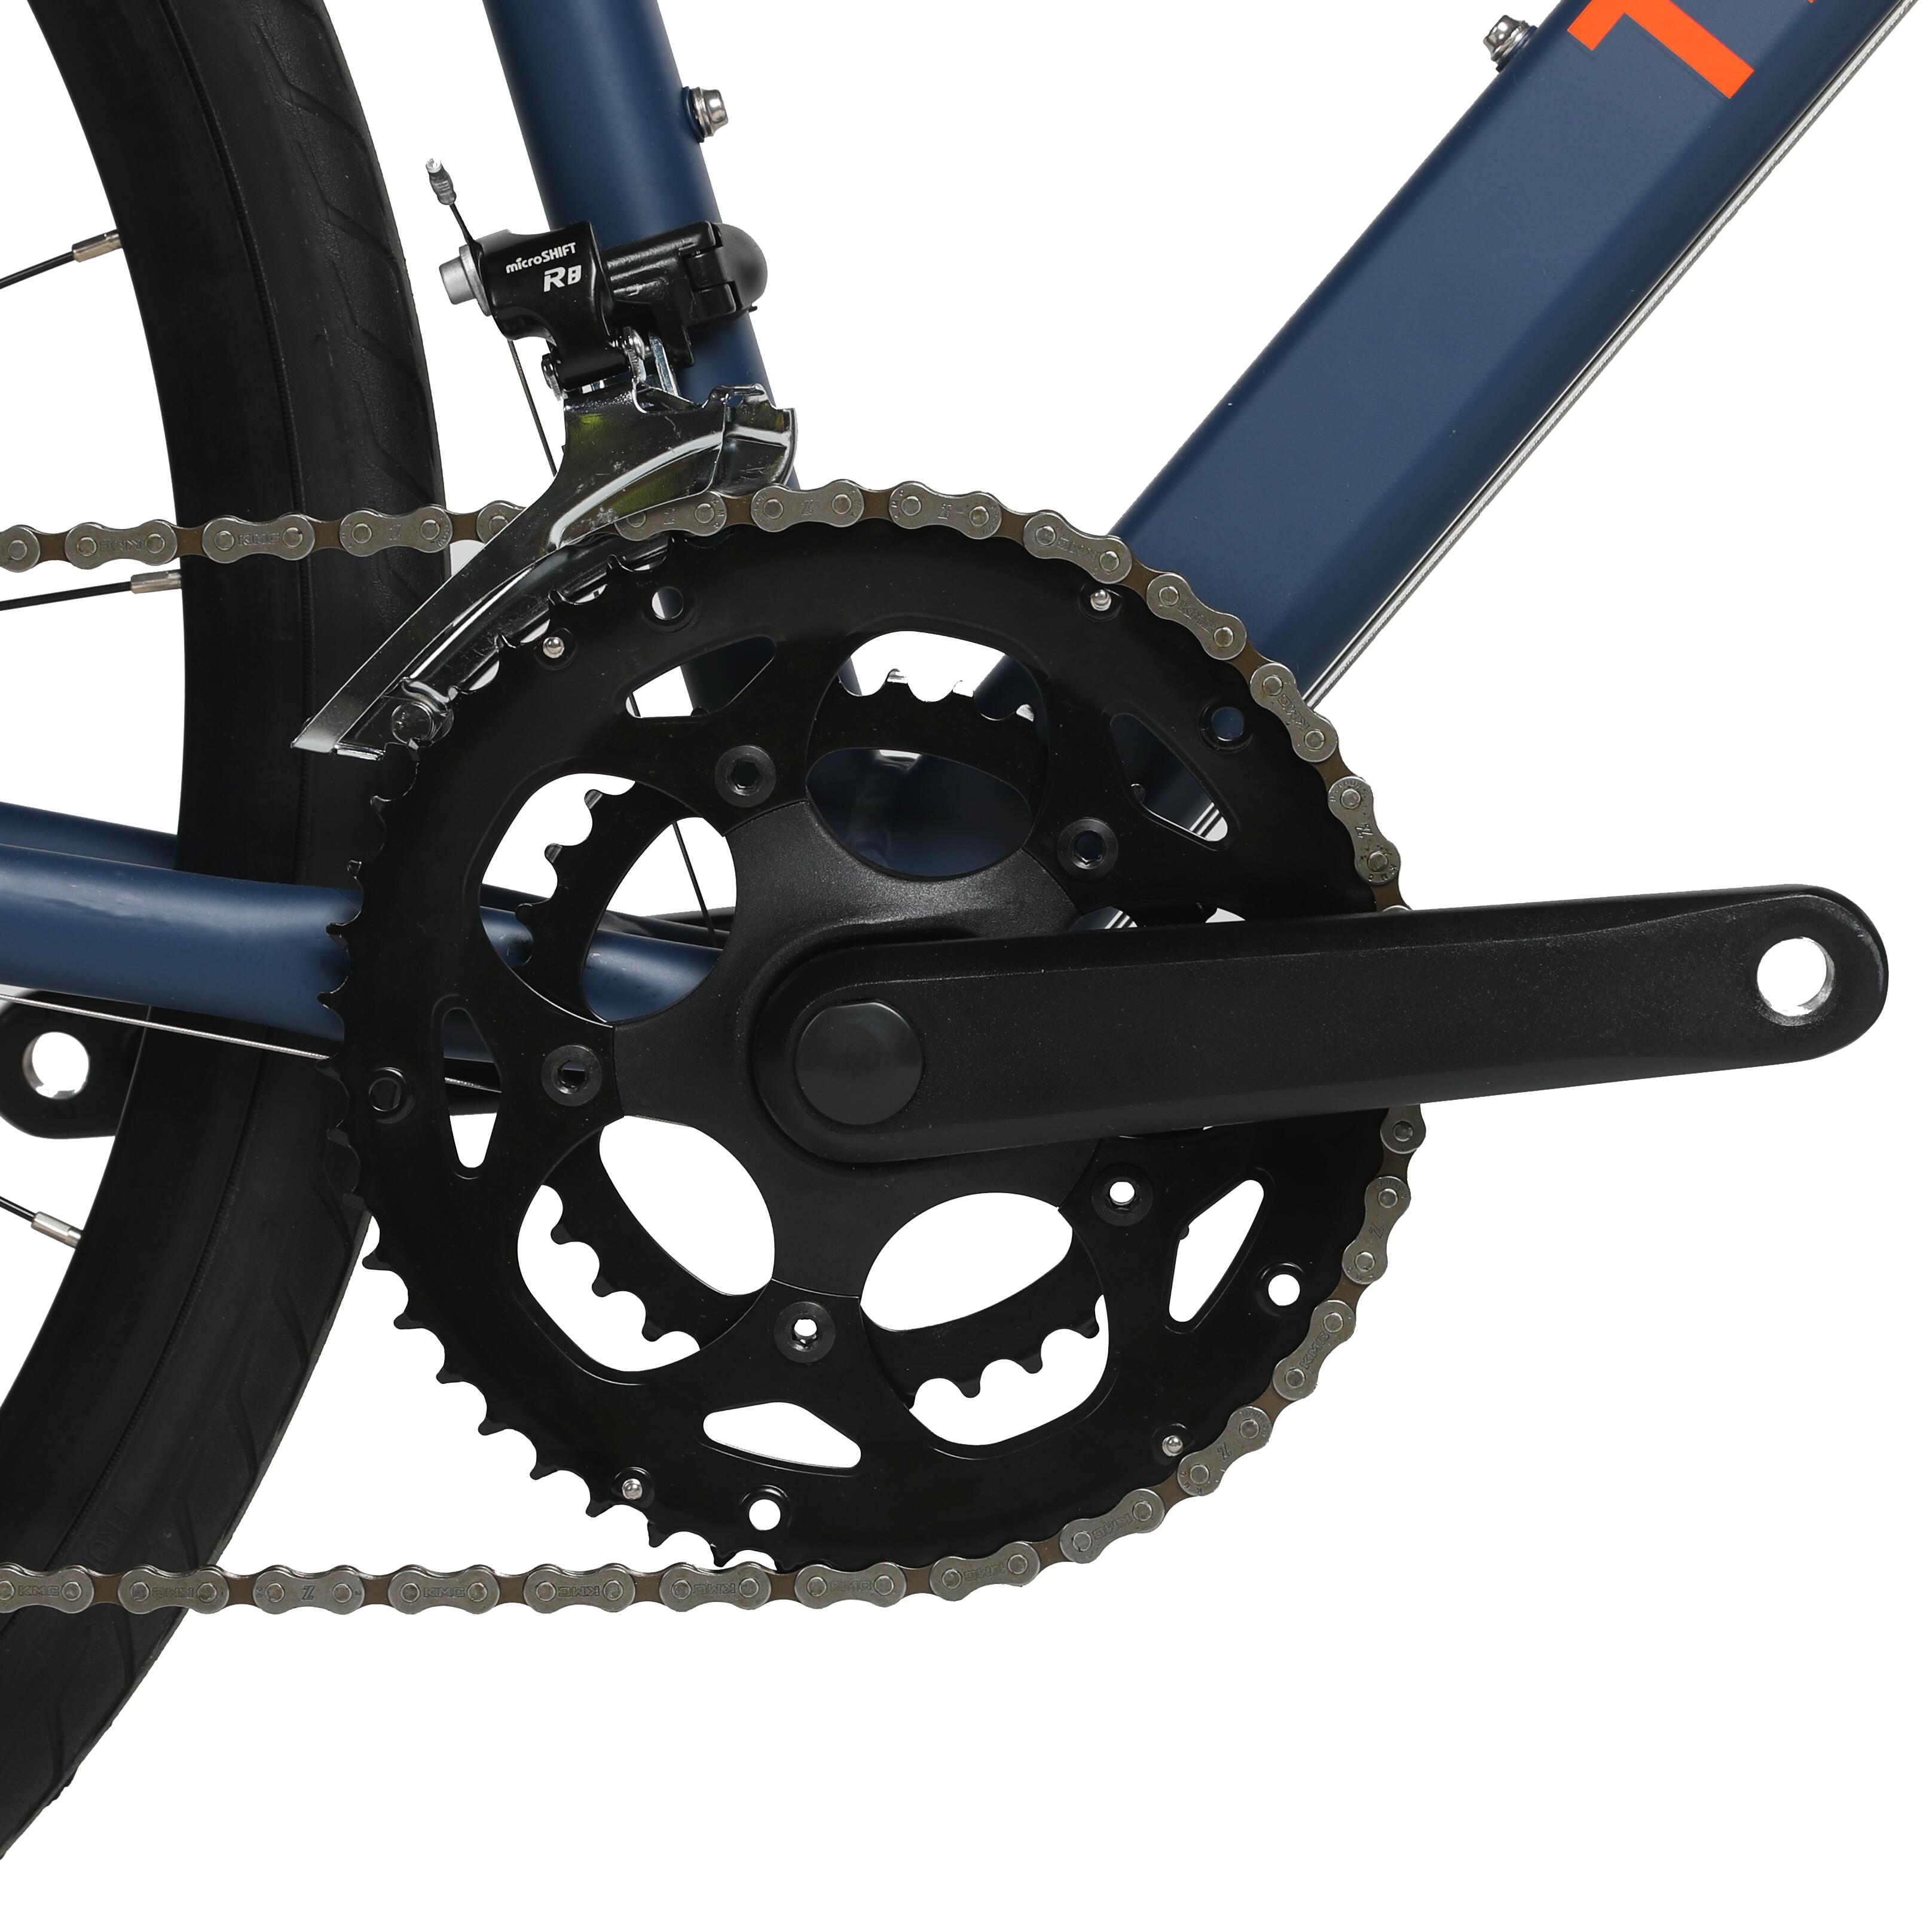 Vélo avec freins à disque guidon plat - RC 120 bleu/orange - TRIBAN